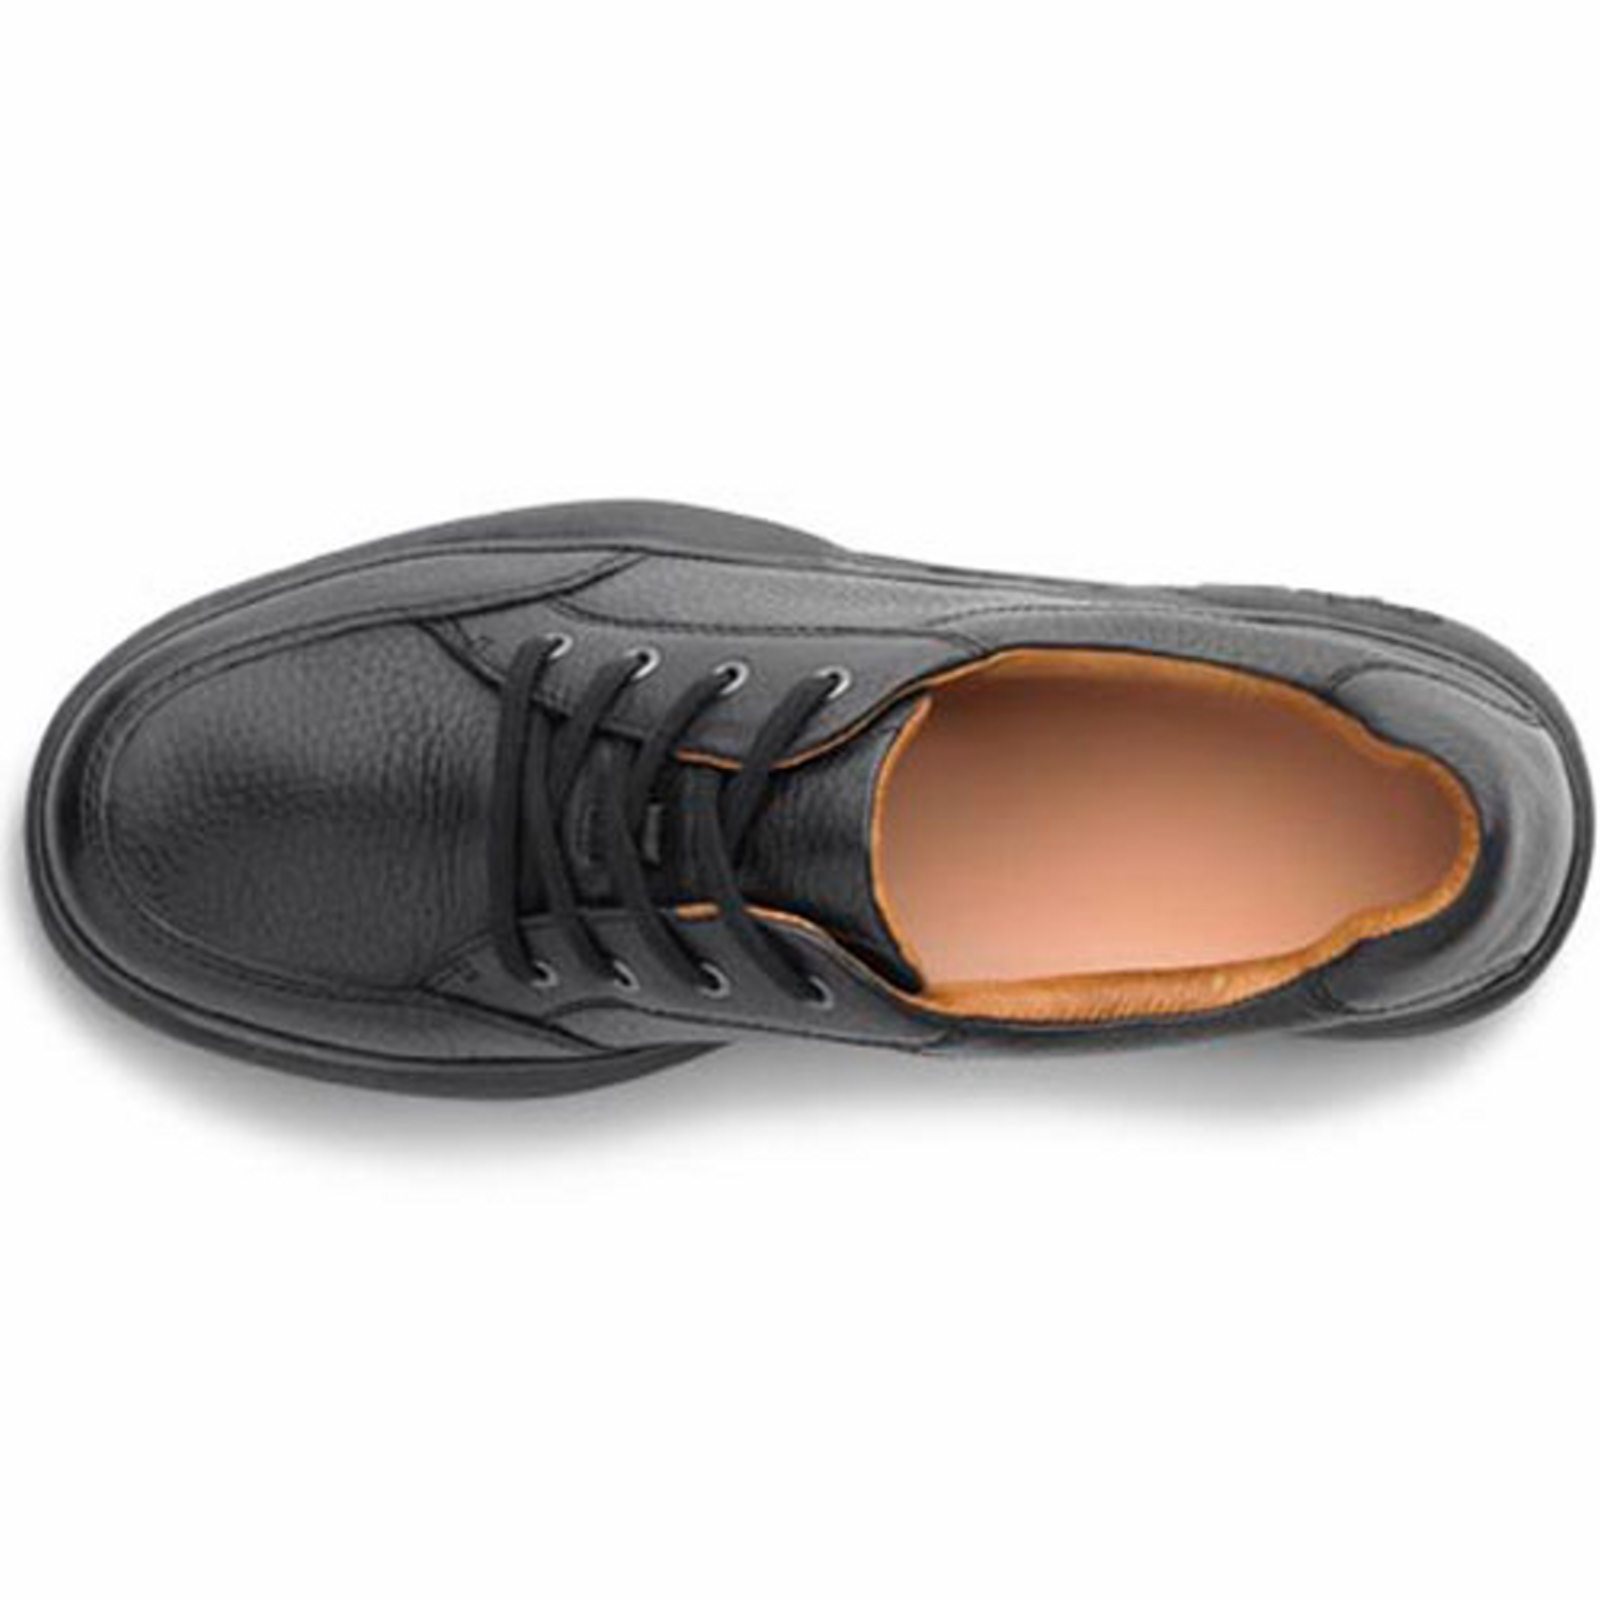 Dr. Comfort Justin Men's Casual Shoe: 6.5 Medium (B/D) Black Lace - image 5 of 5